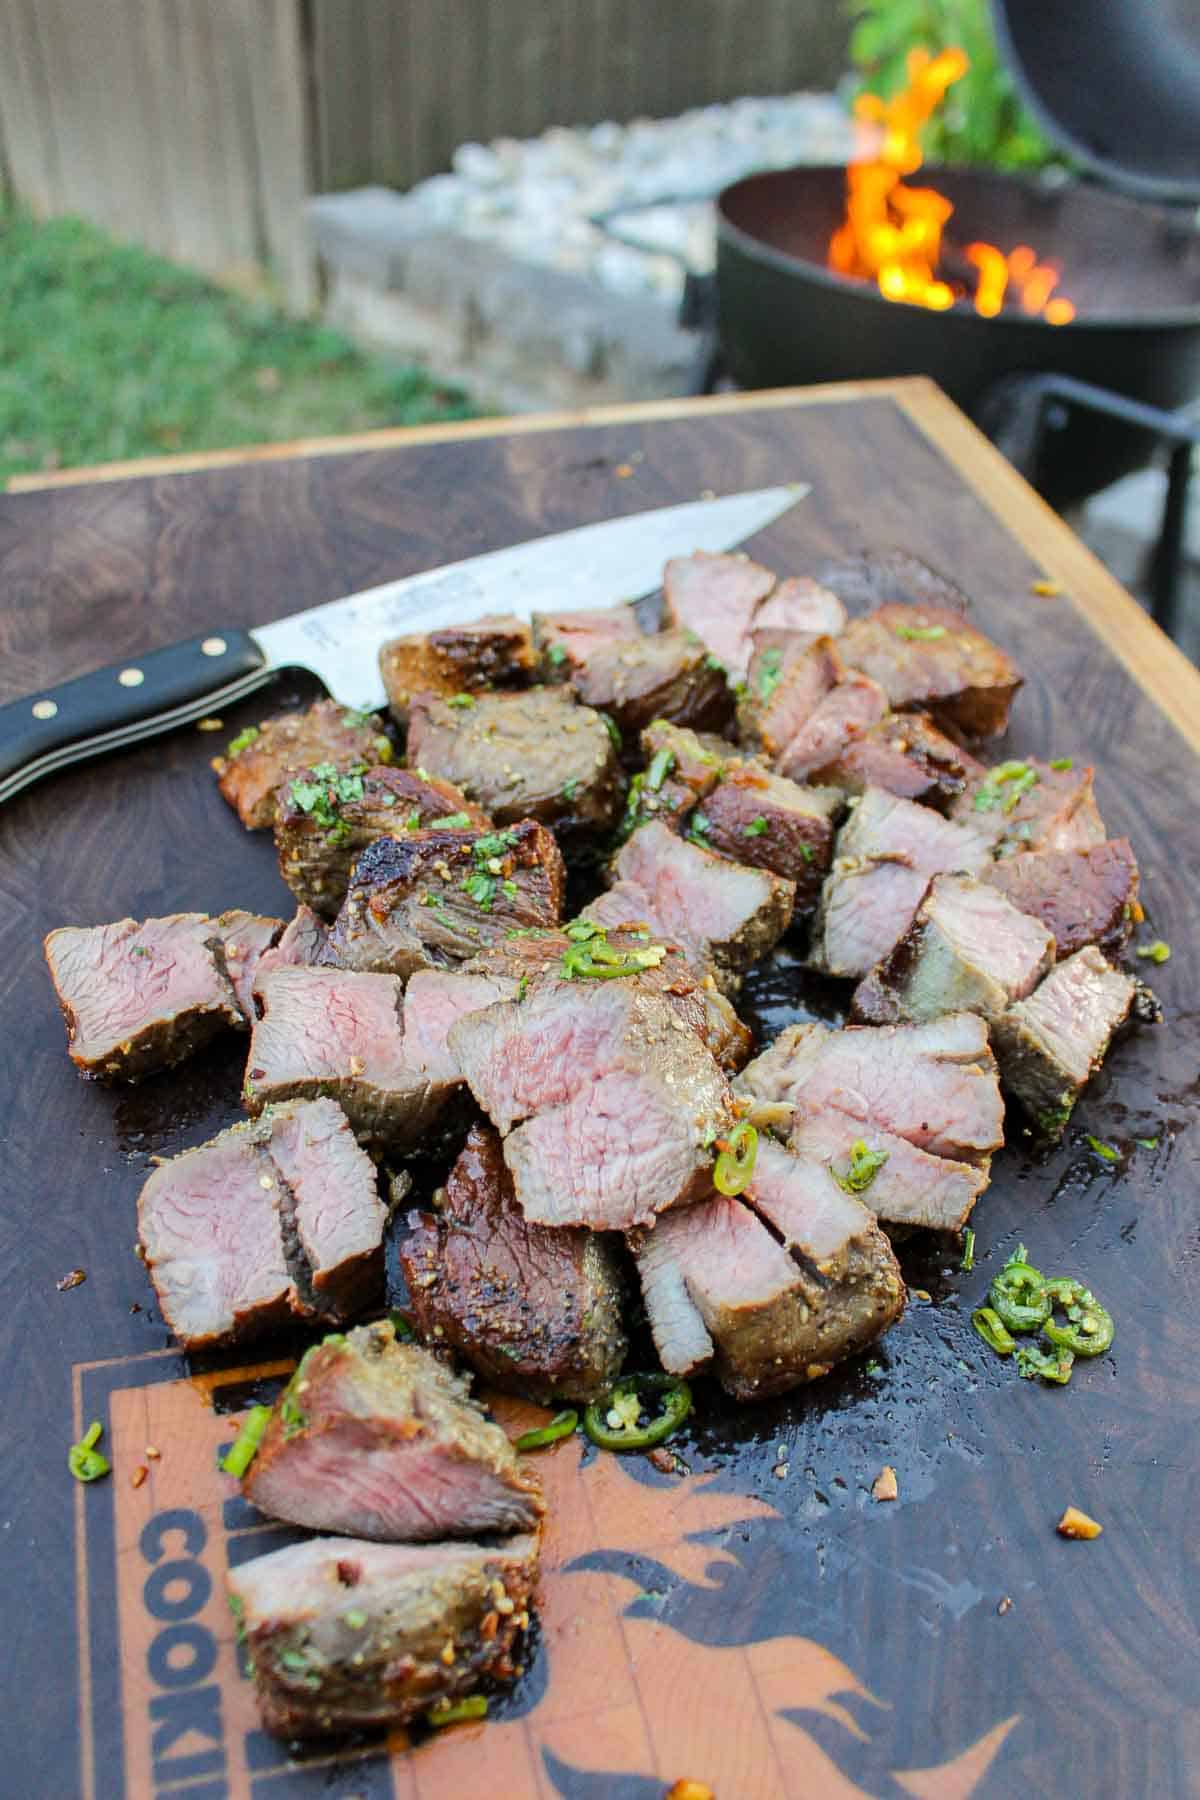 The sliced steak on a cutting board.